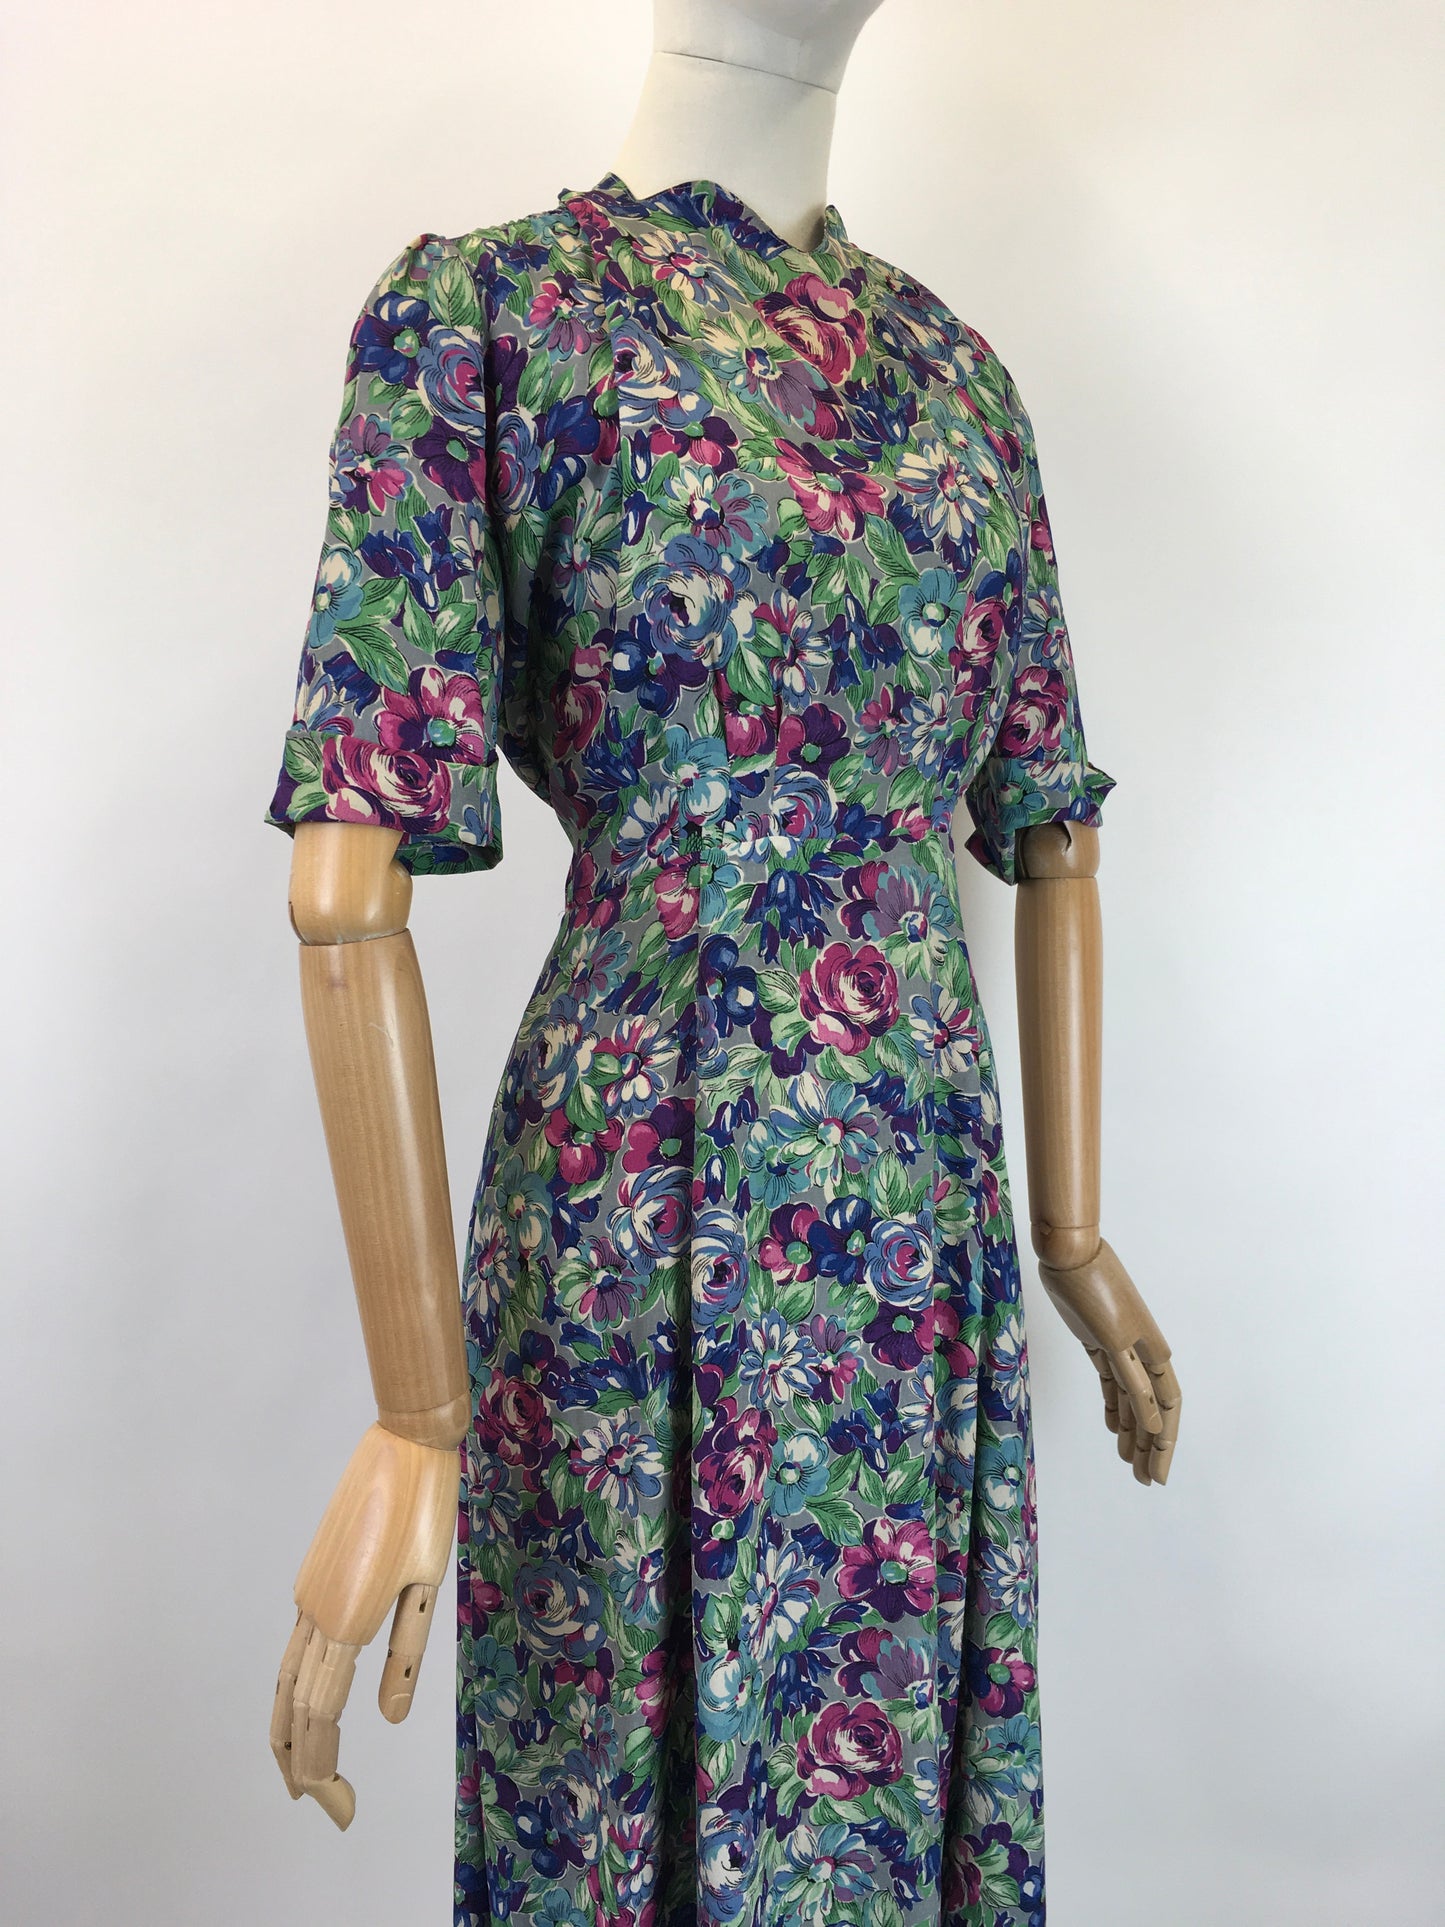 Original 1940's Sensational Floral Crepe Dress  - With Exquisite Neckline Shaping